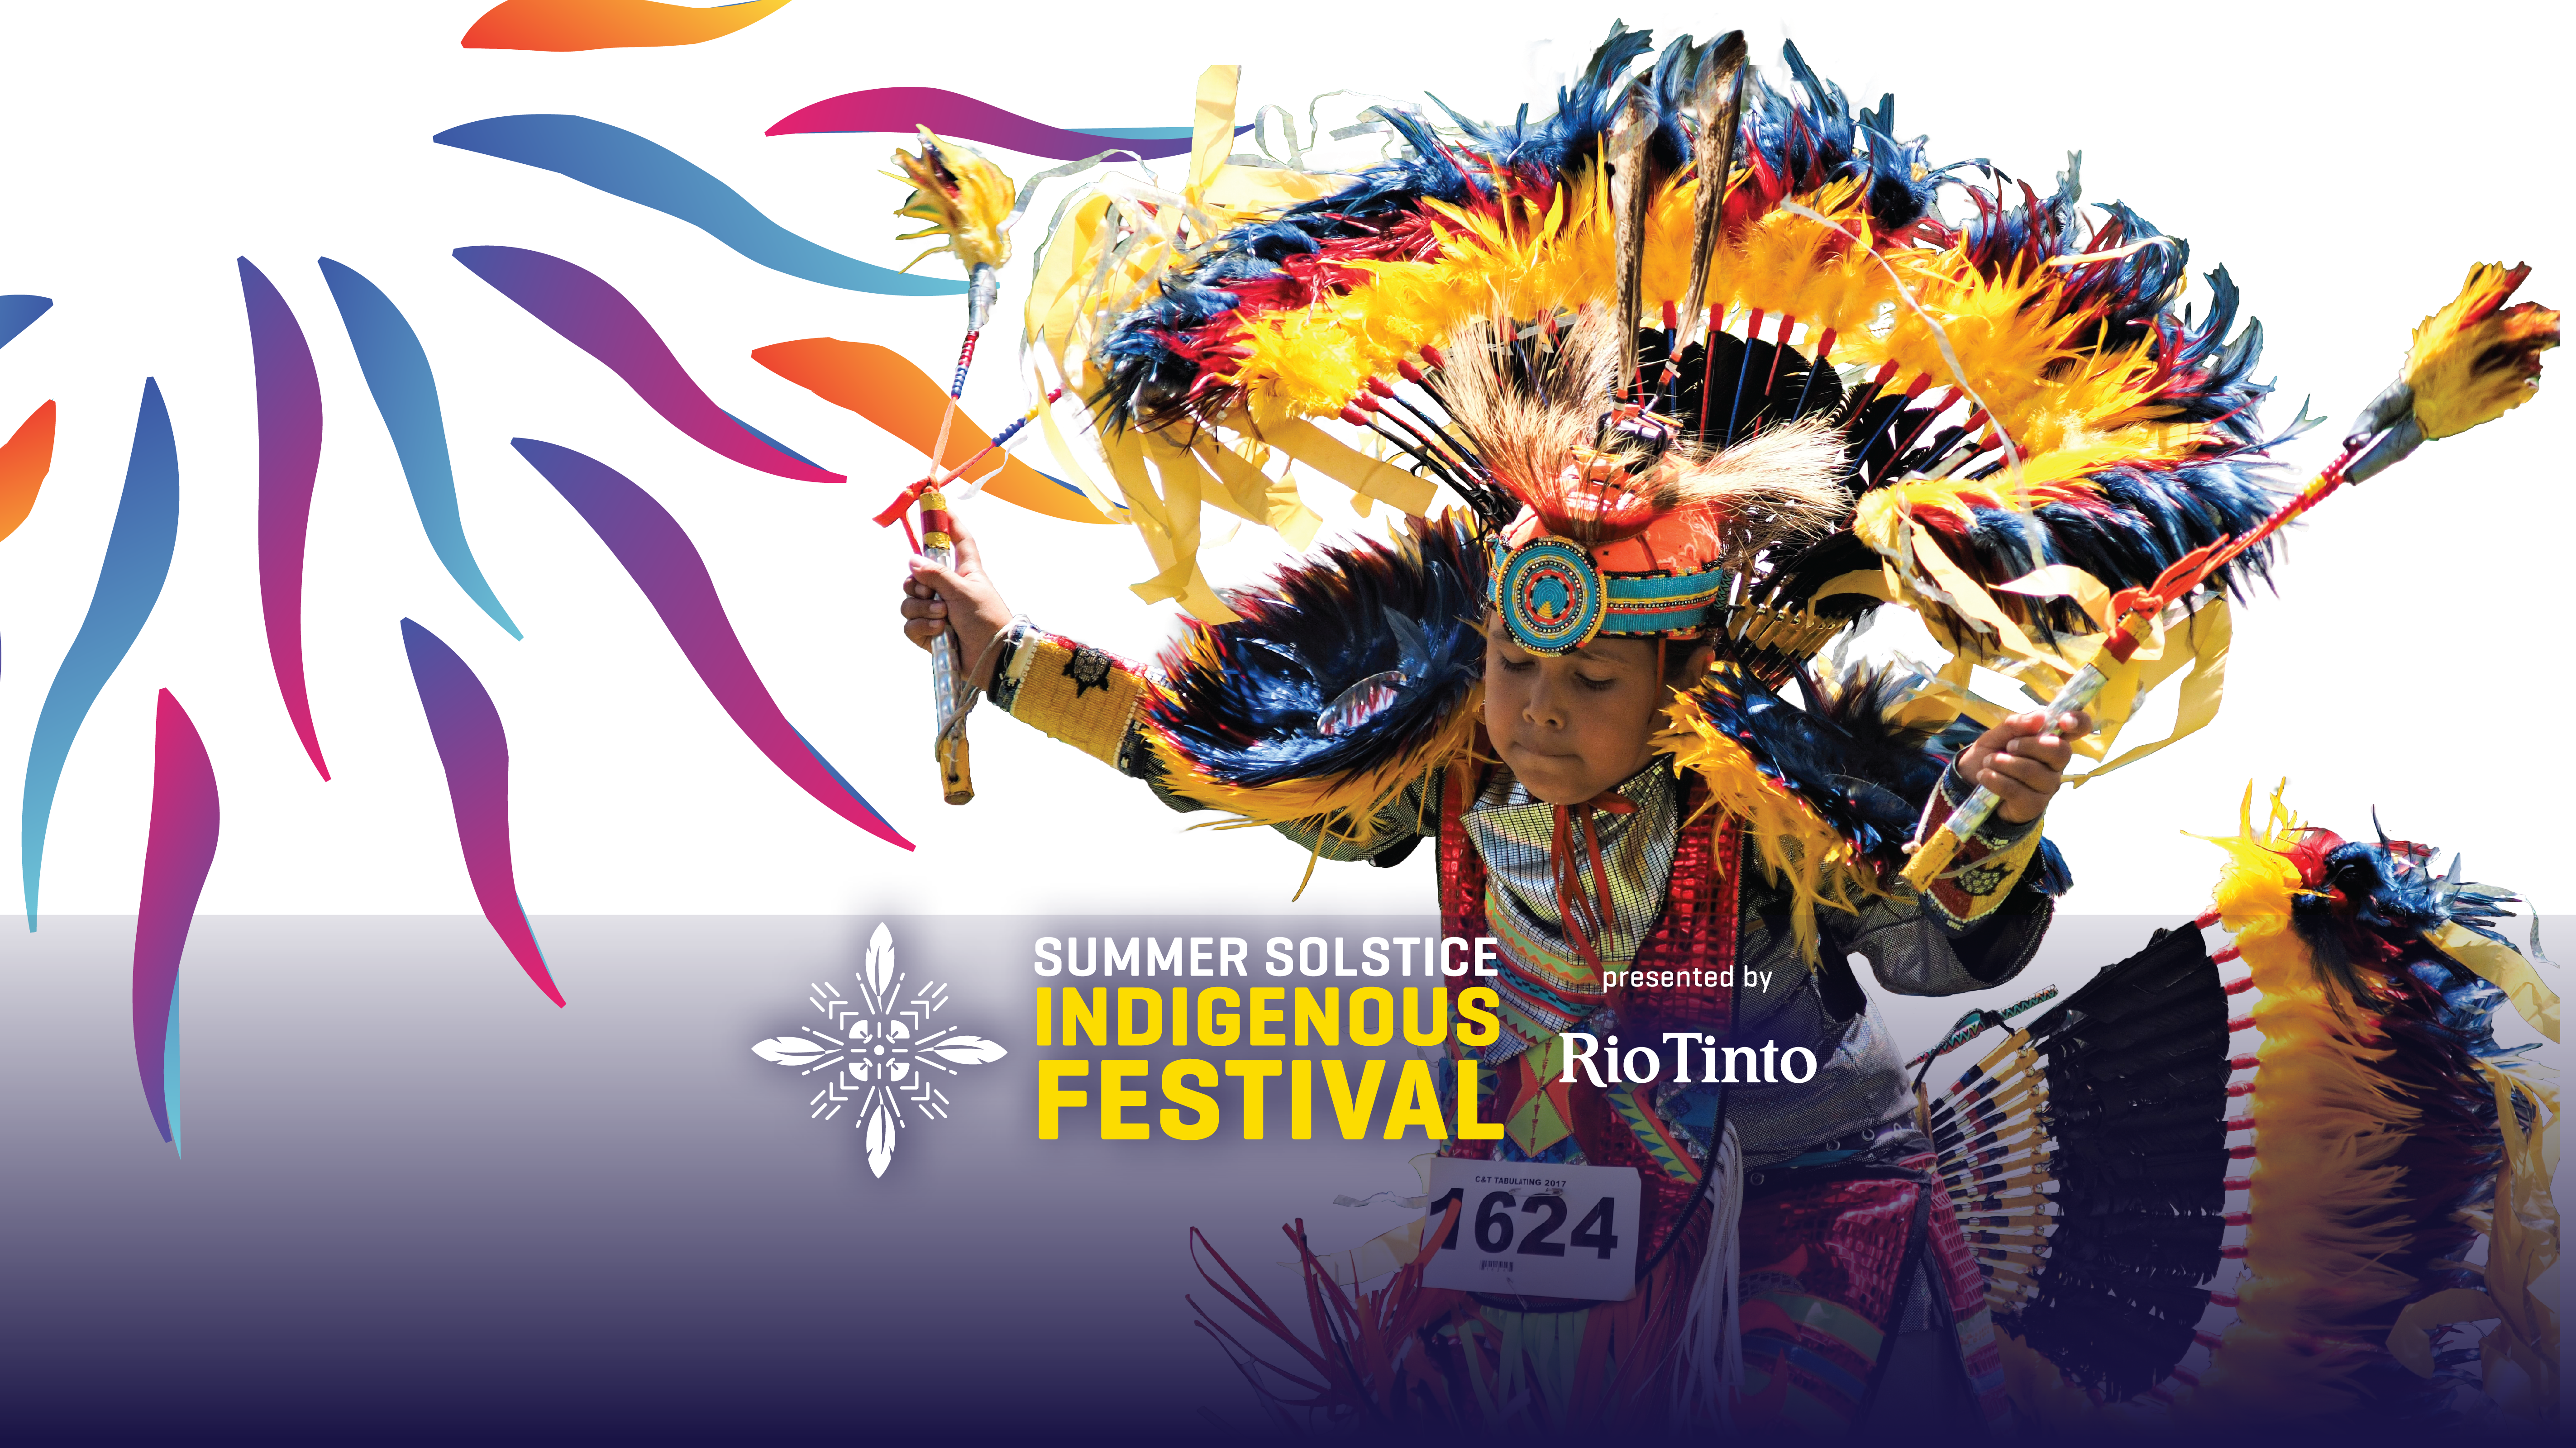 _Summer Solstice Indigenous Festival - Summer Solstice Festivals